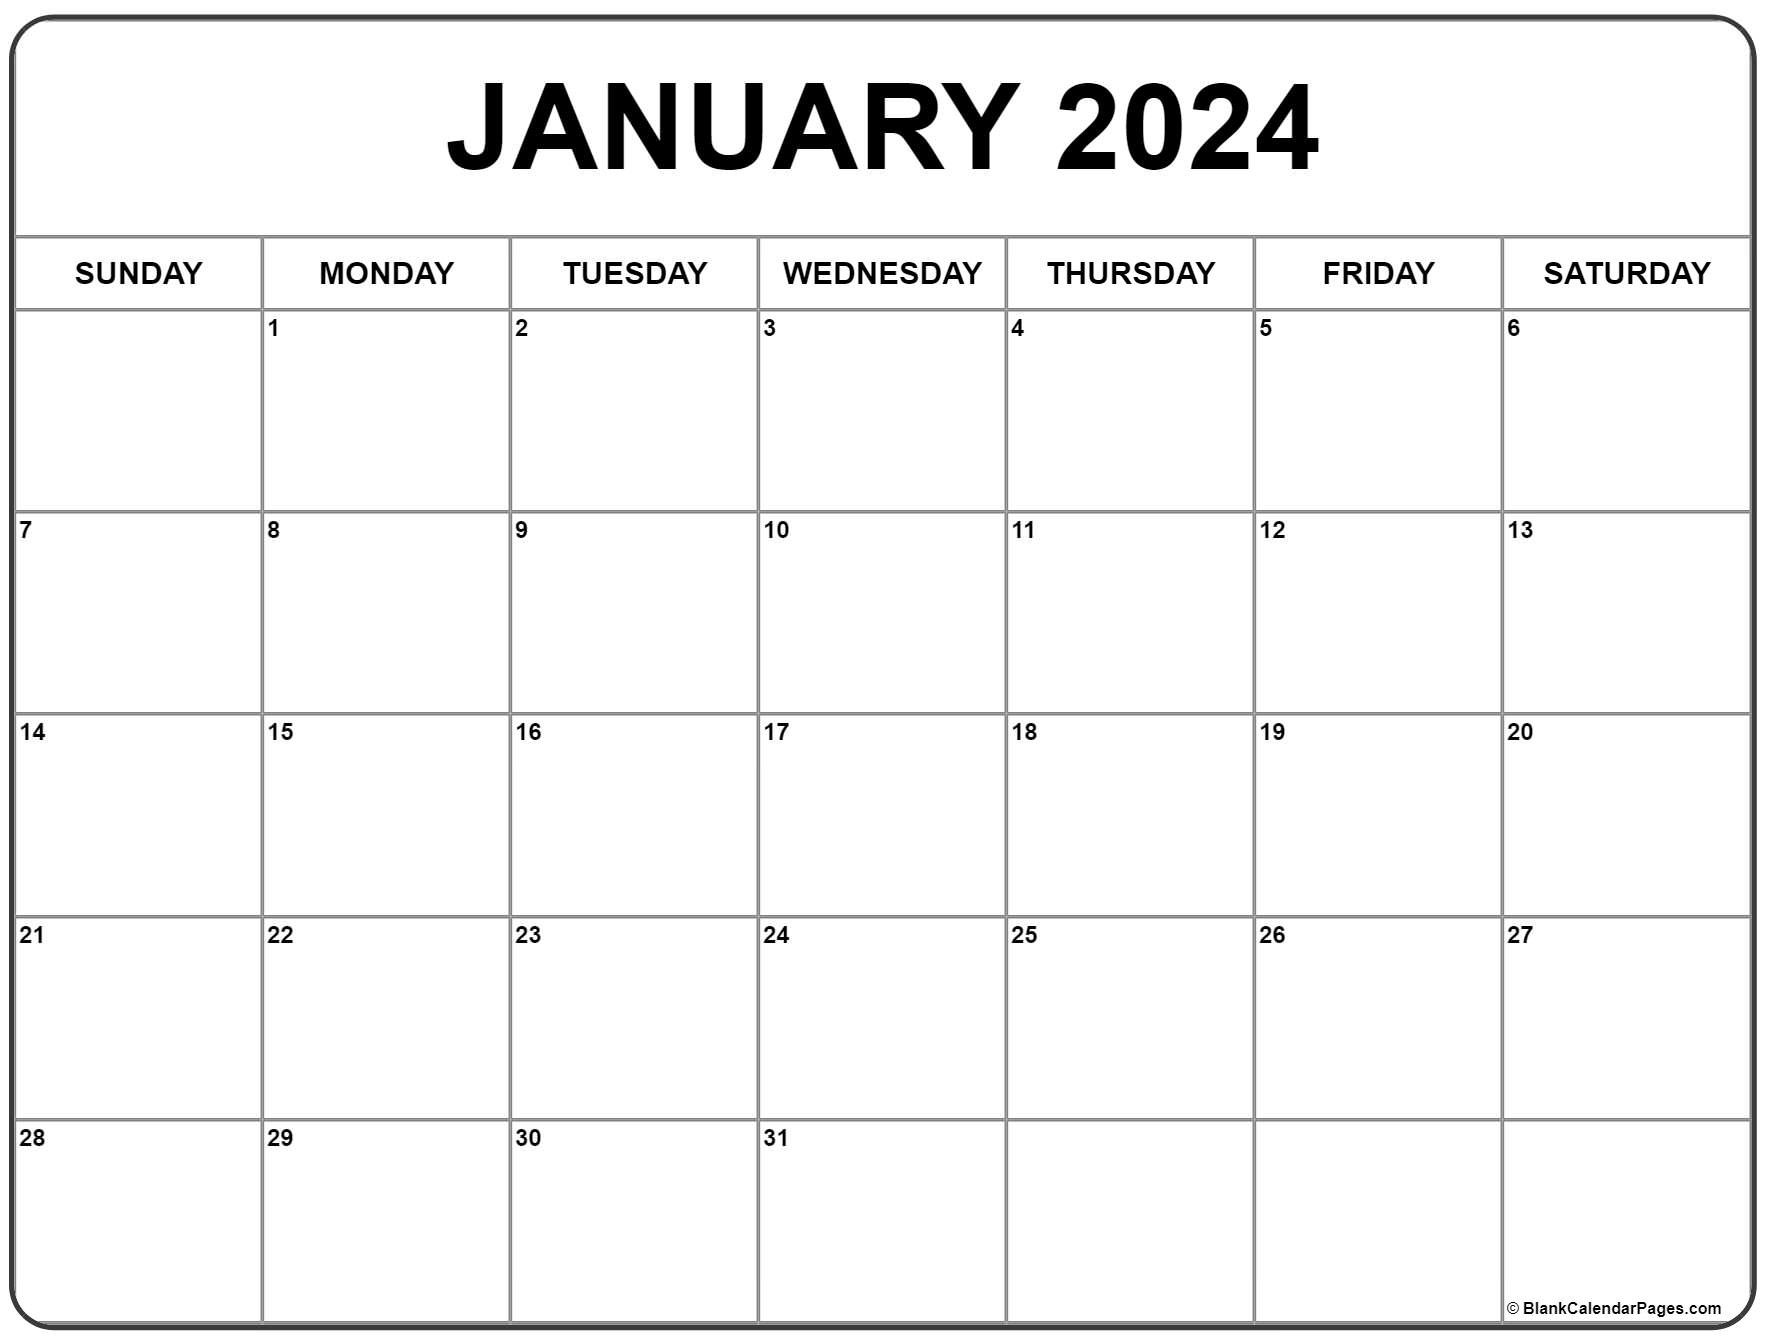 Monthly 2022 Calendar Printable January 2022 Calendar | Free Printable Calendar Templates